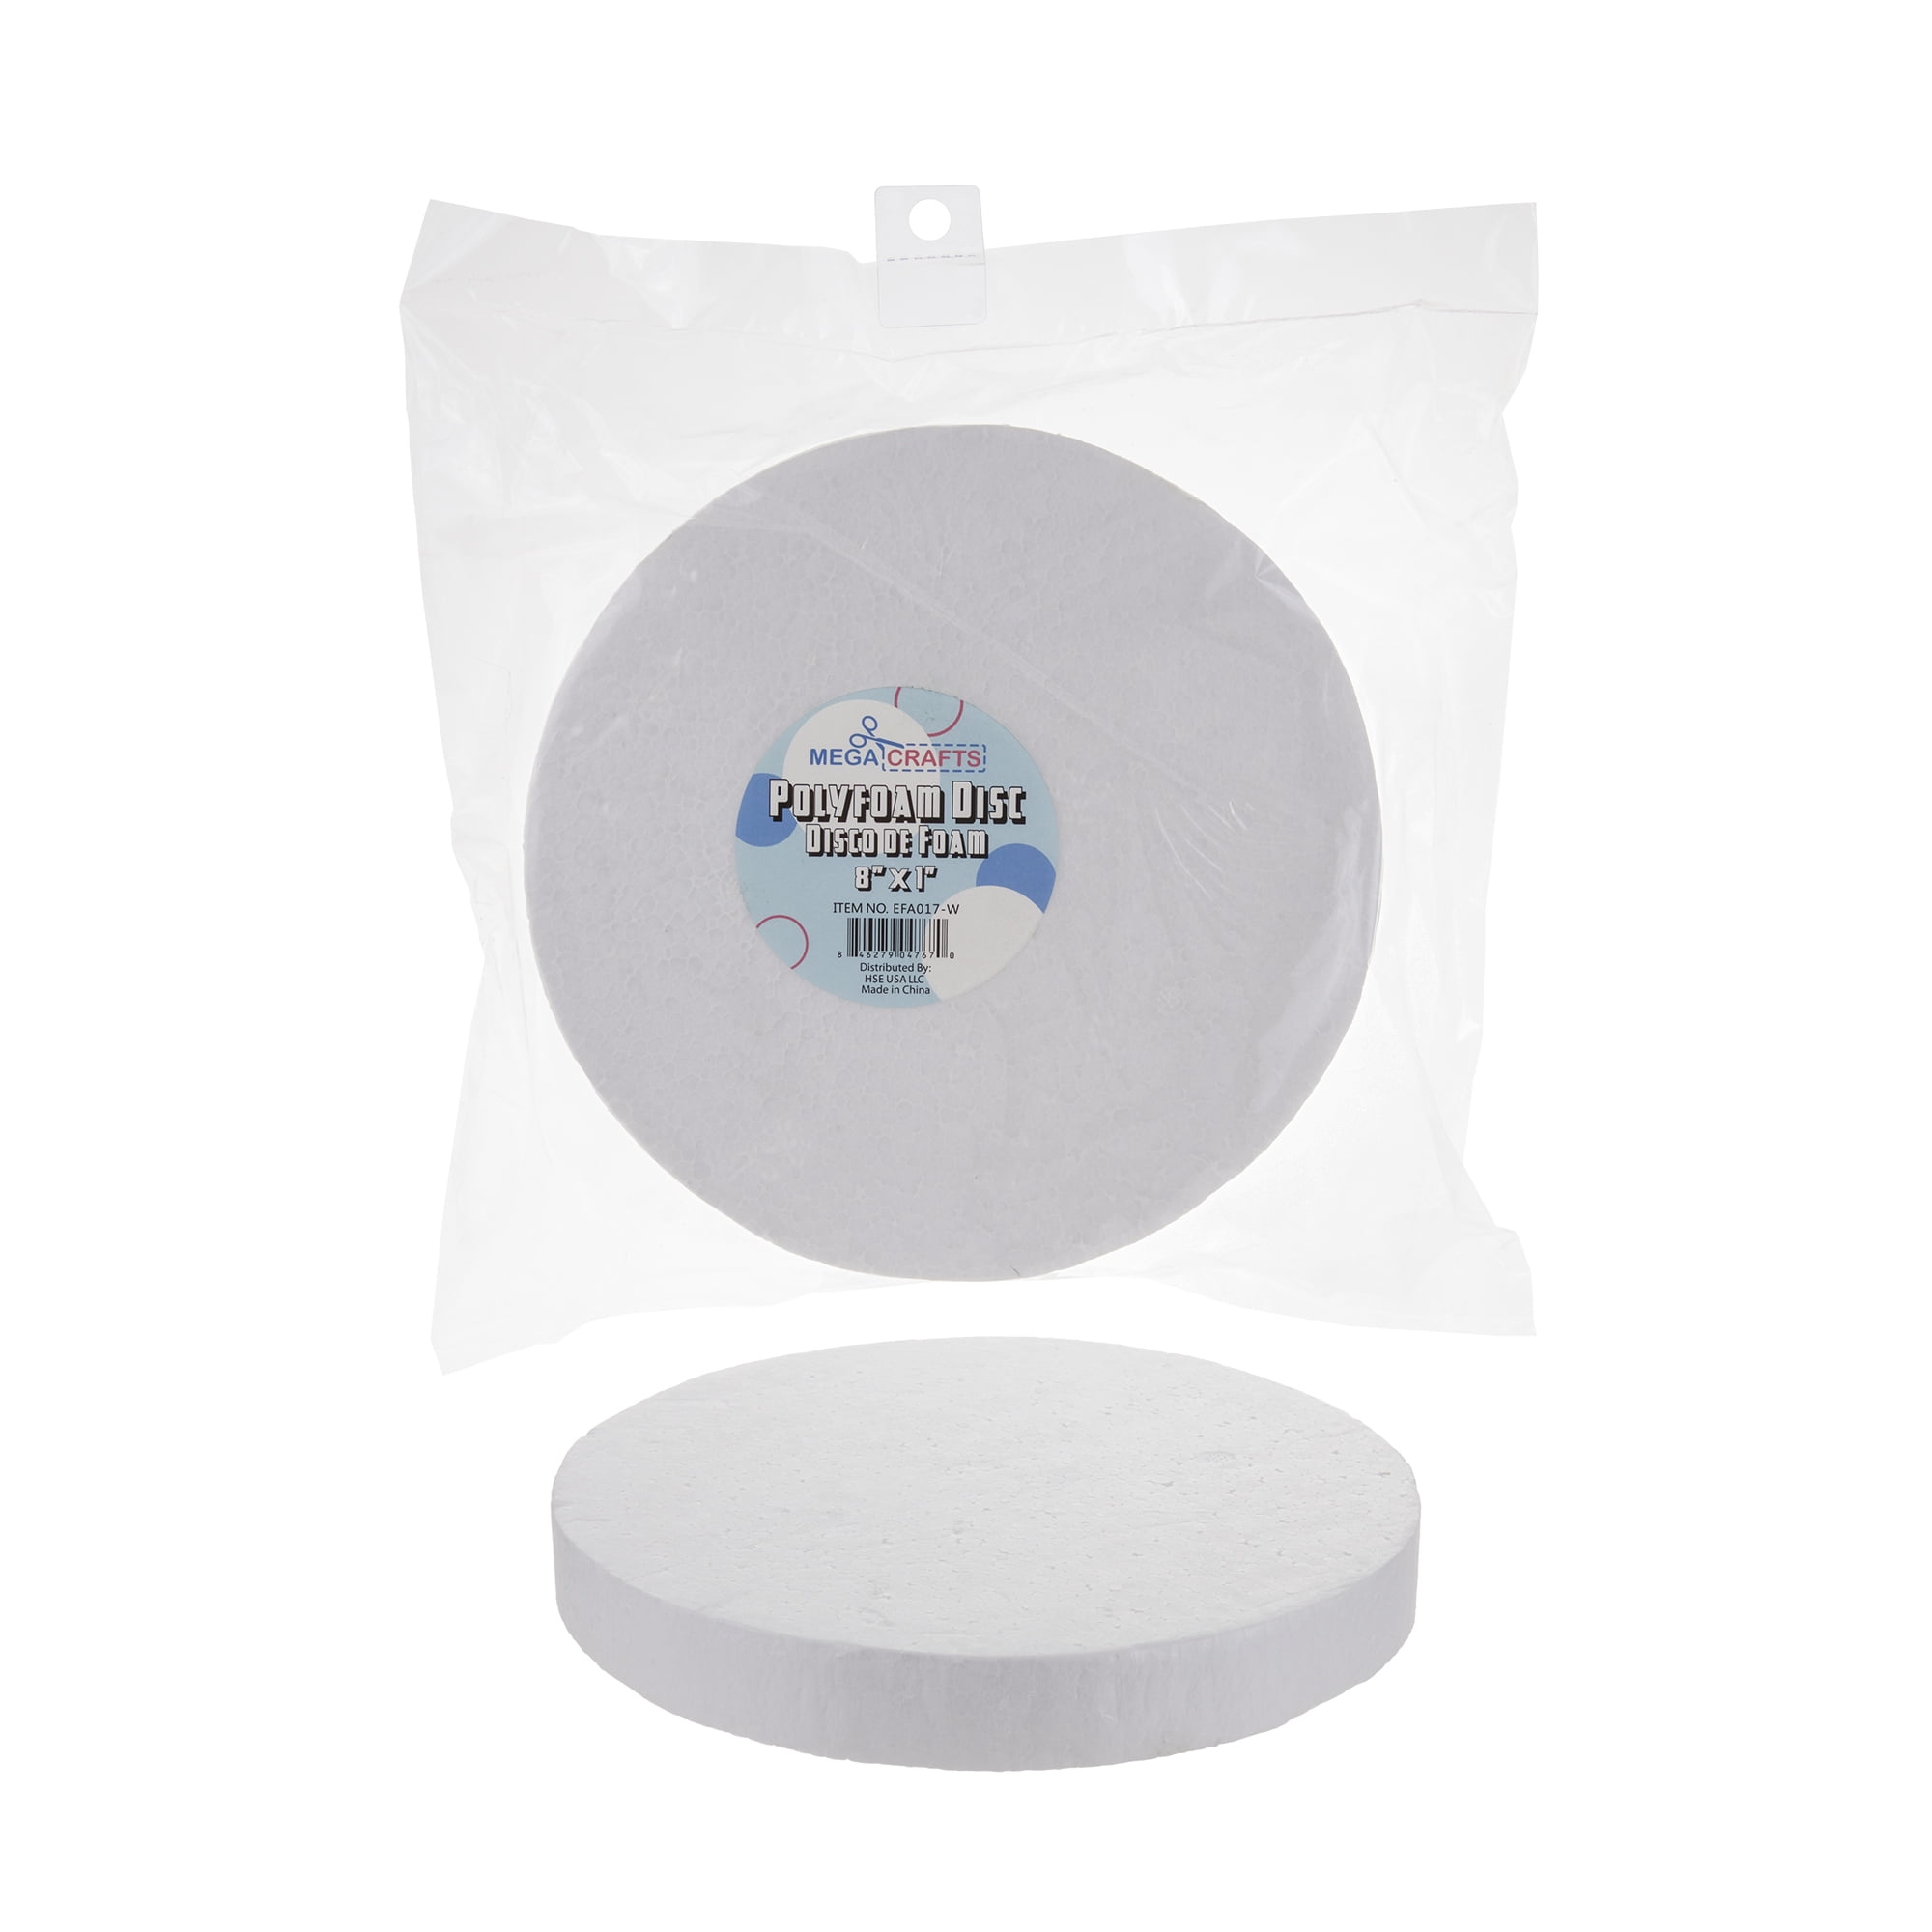 Foam Craft Disc 8 Inch Styrofoam Disk for Art & Crafts (30 Piece Set)